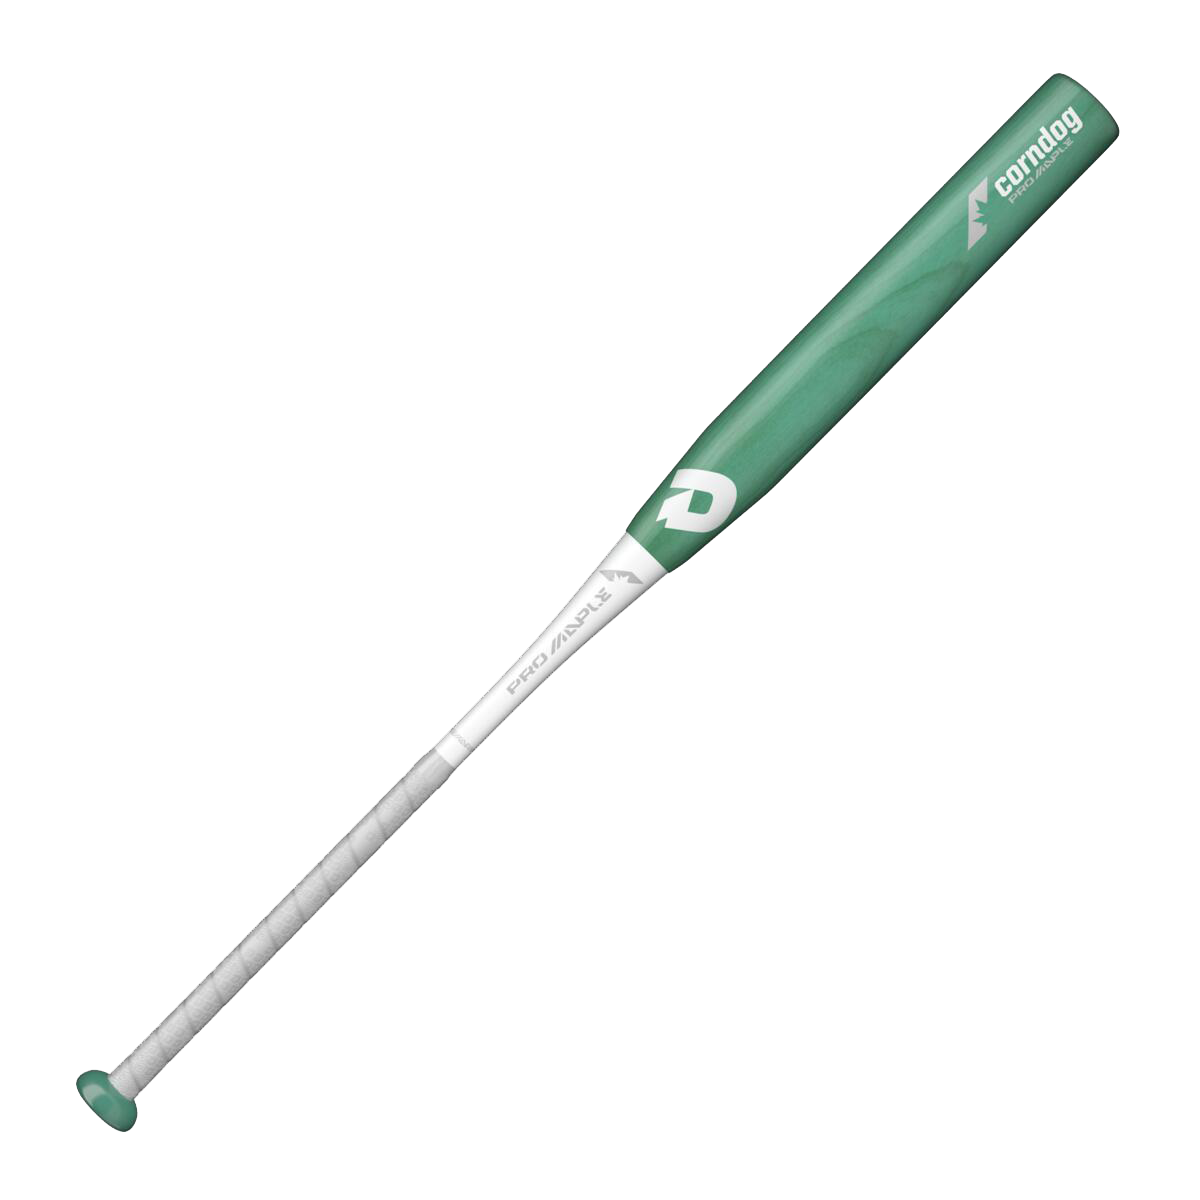 2022 DeMarini Corndog Maple Wood Composite Slowpitch Softball Bat